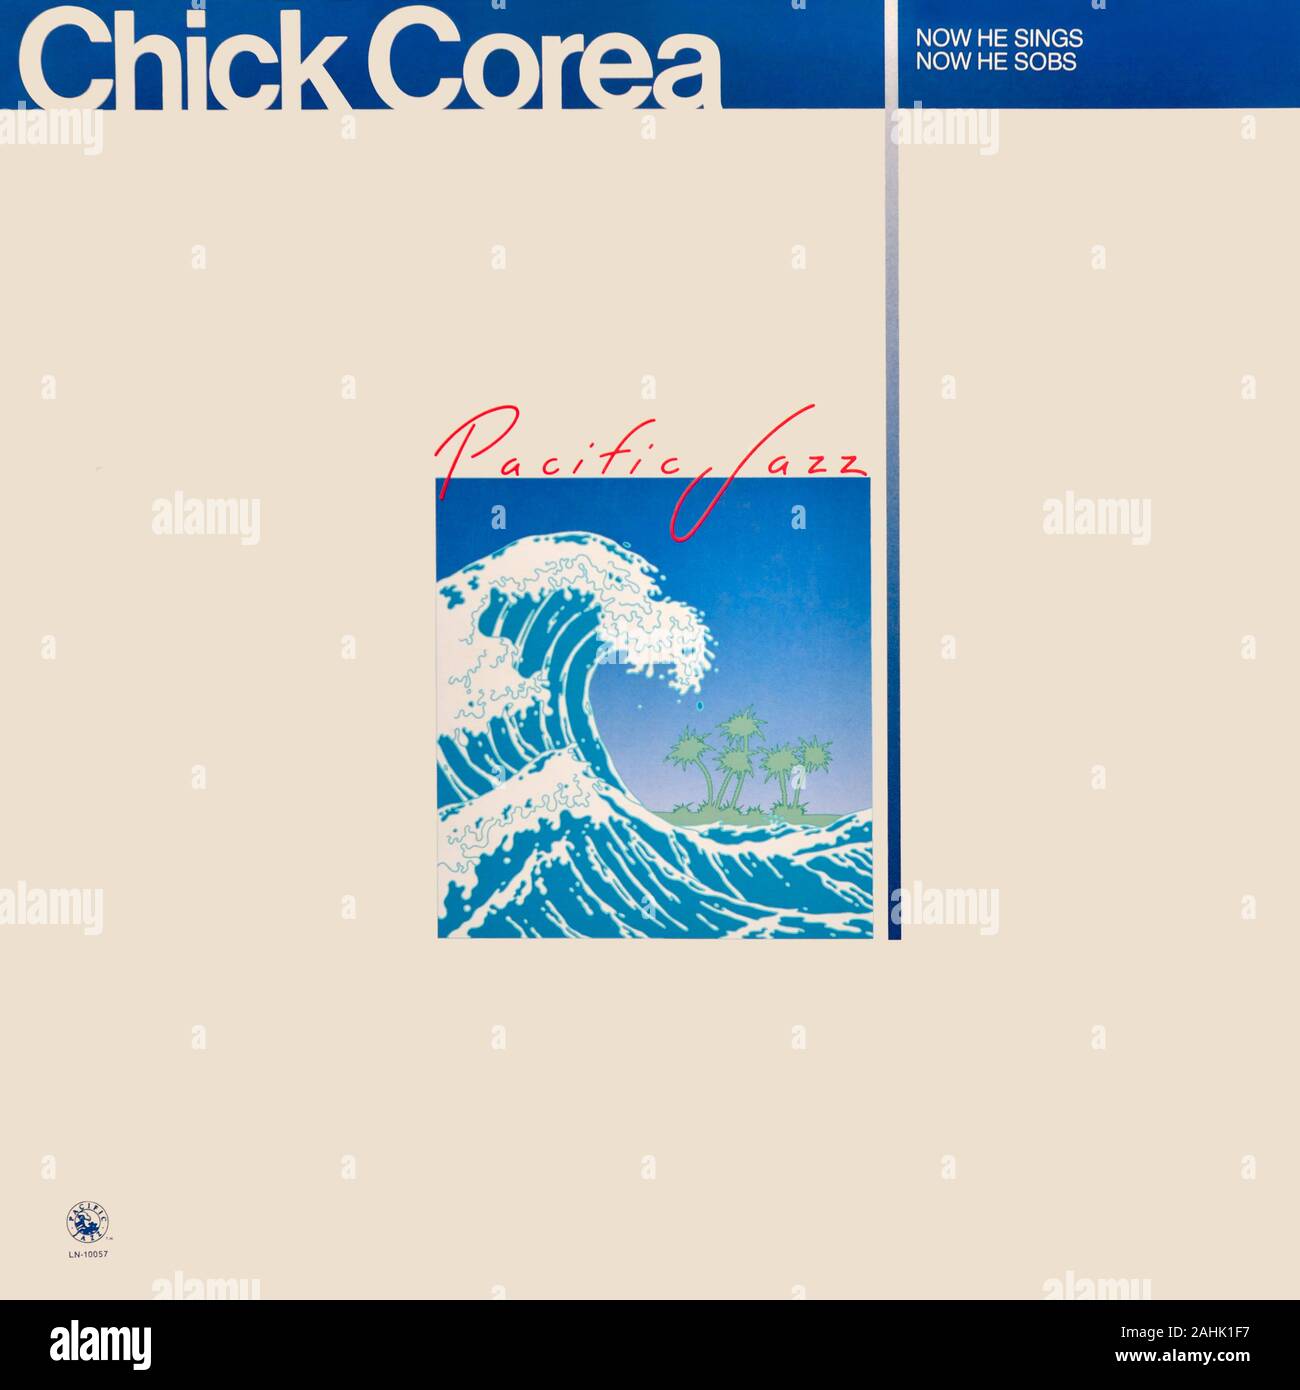 Chick Corea - original Vinyl Album Cover - Now He Sings, Now He schluchzt - 1981 Stockfoto